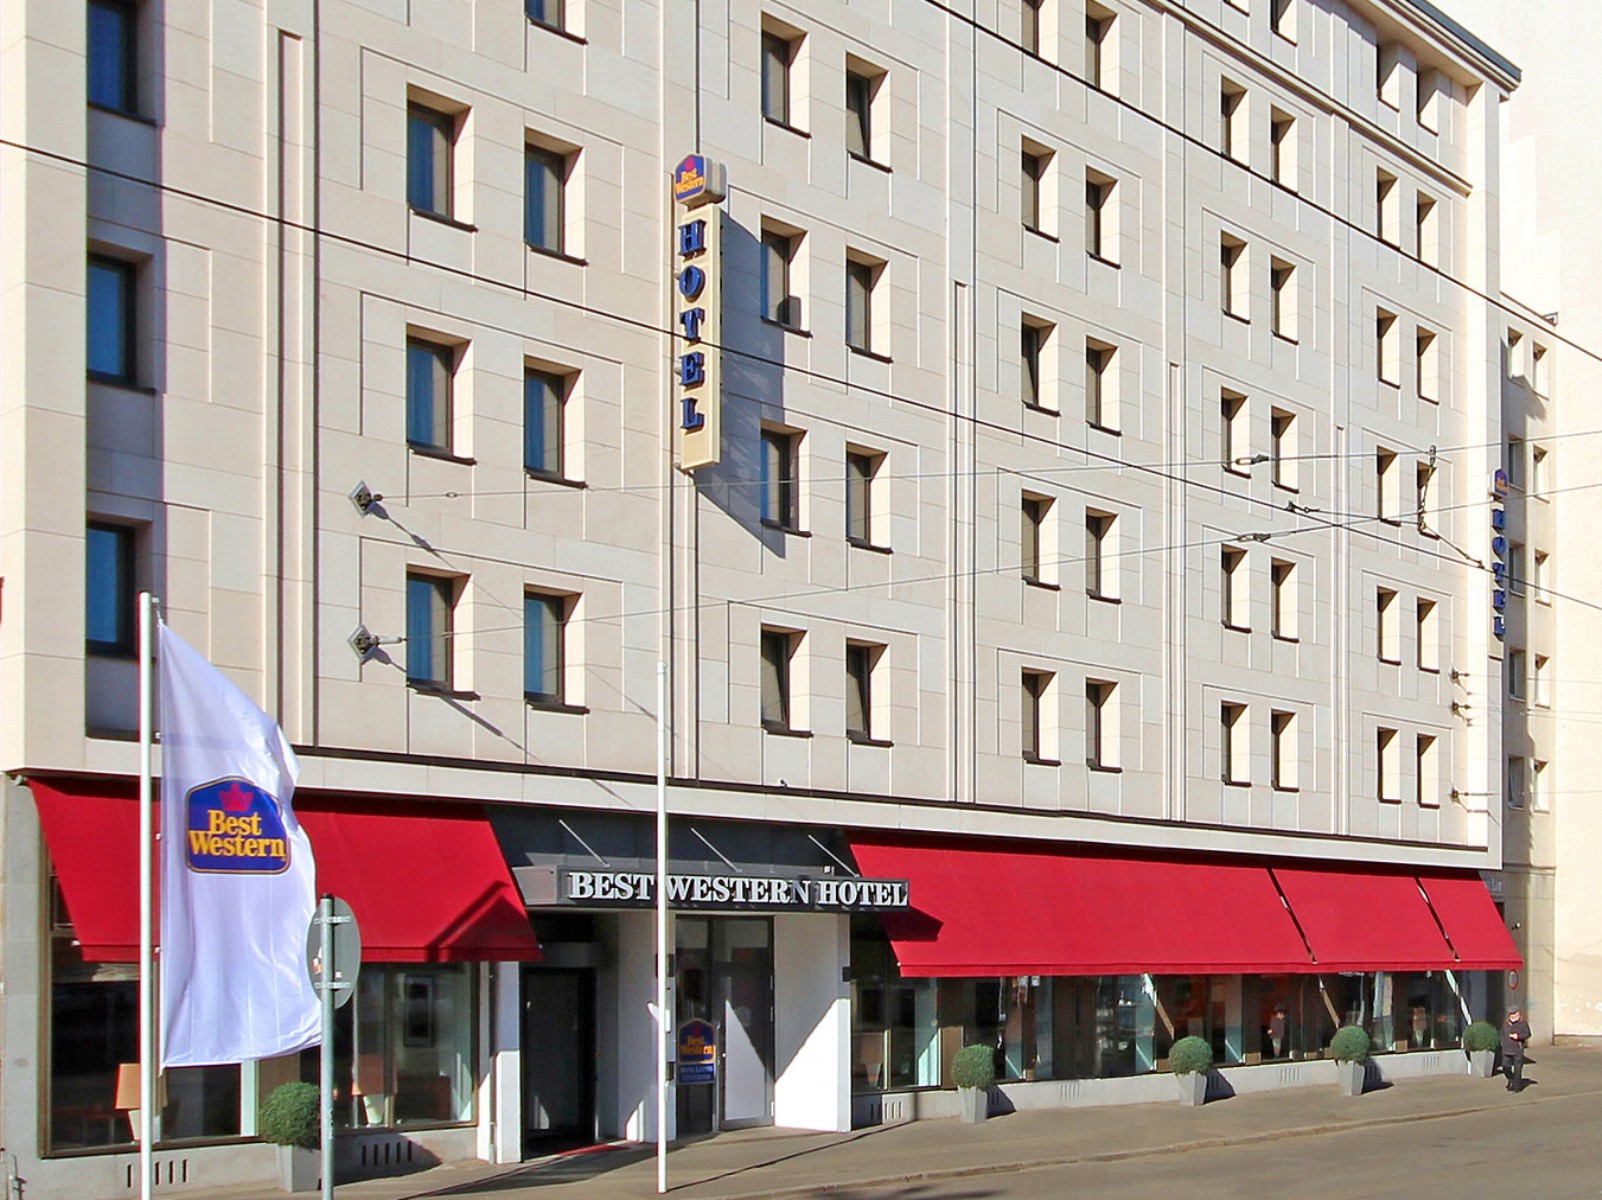 Best Western Hotel Leipzig City Center <br/>62.22 ew <br/> <a href='http://vakantieoplossing.nl/outpage/?id=c1577b928a9d0c714da588ddc8bb578e' target='_blank'>View Details</a>